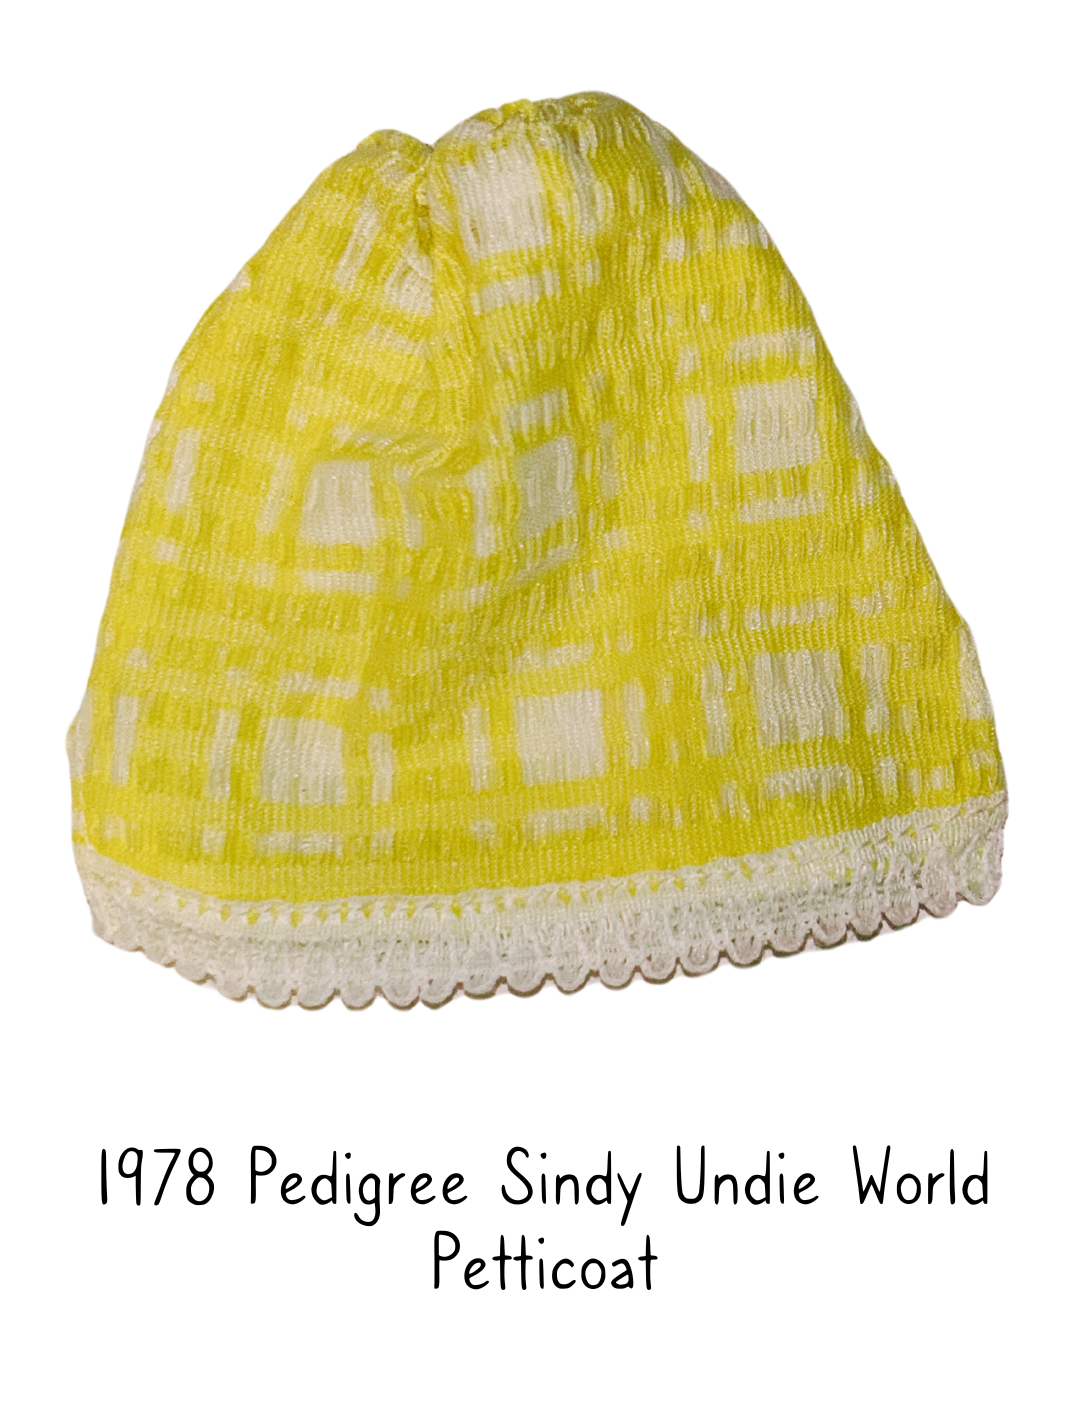 1978 Pedigree Sindy Undie World Lingerie Pettiocat